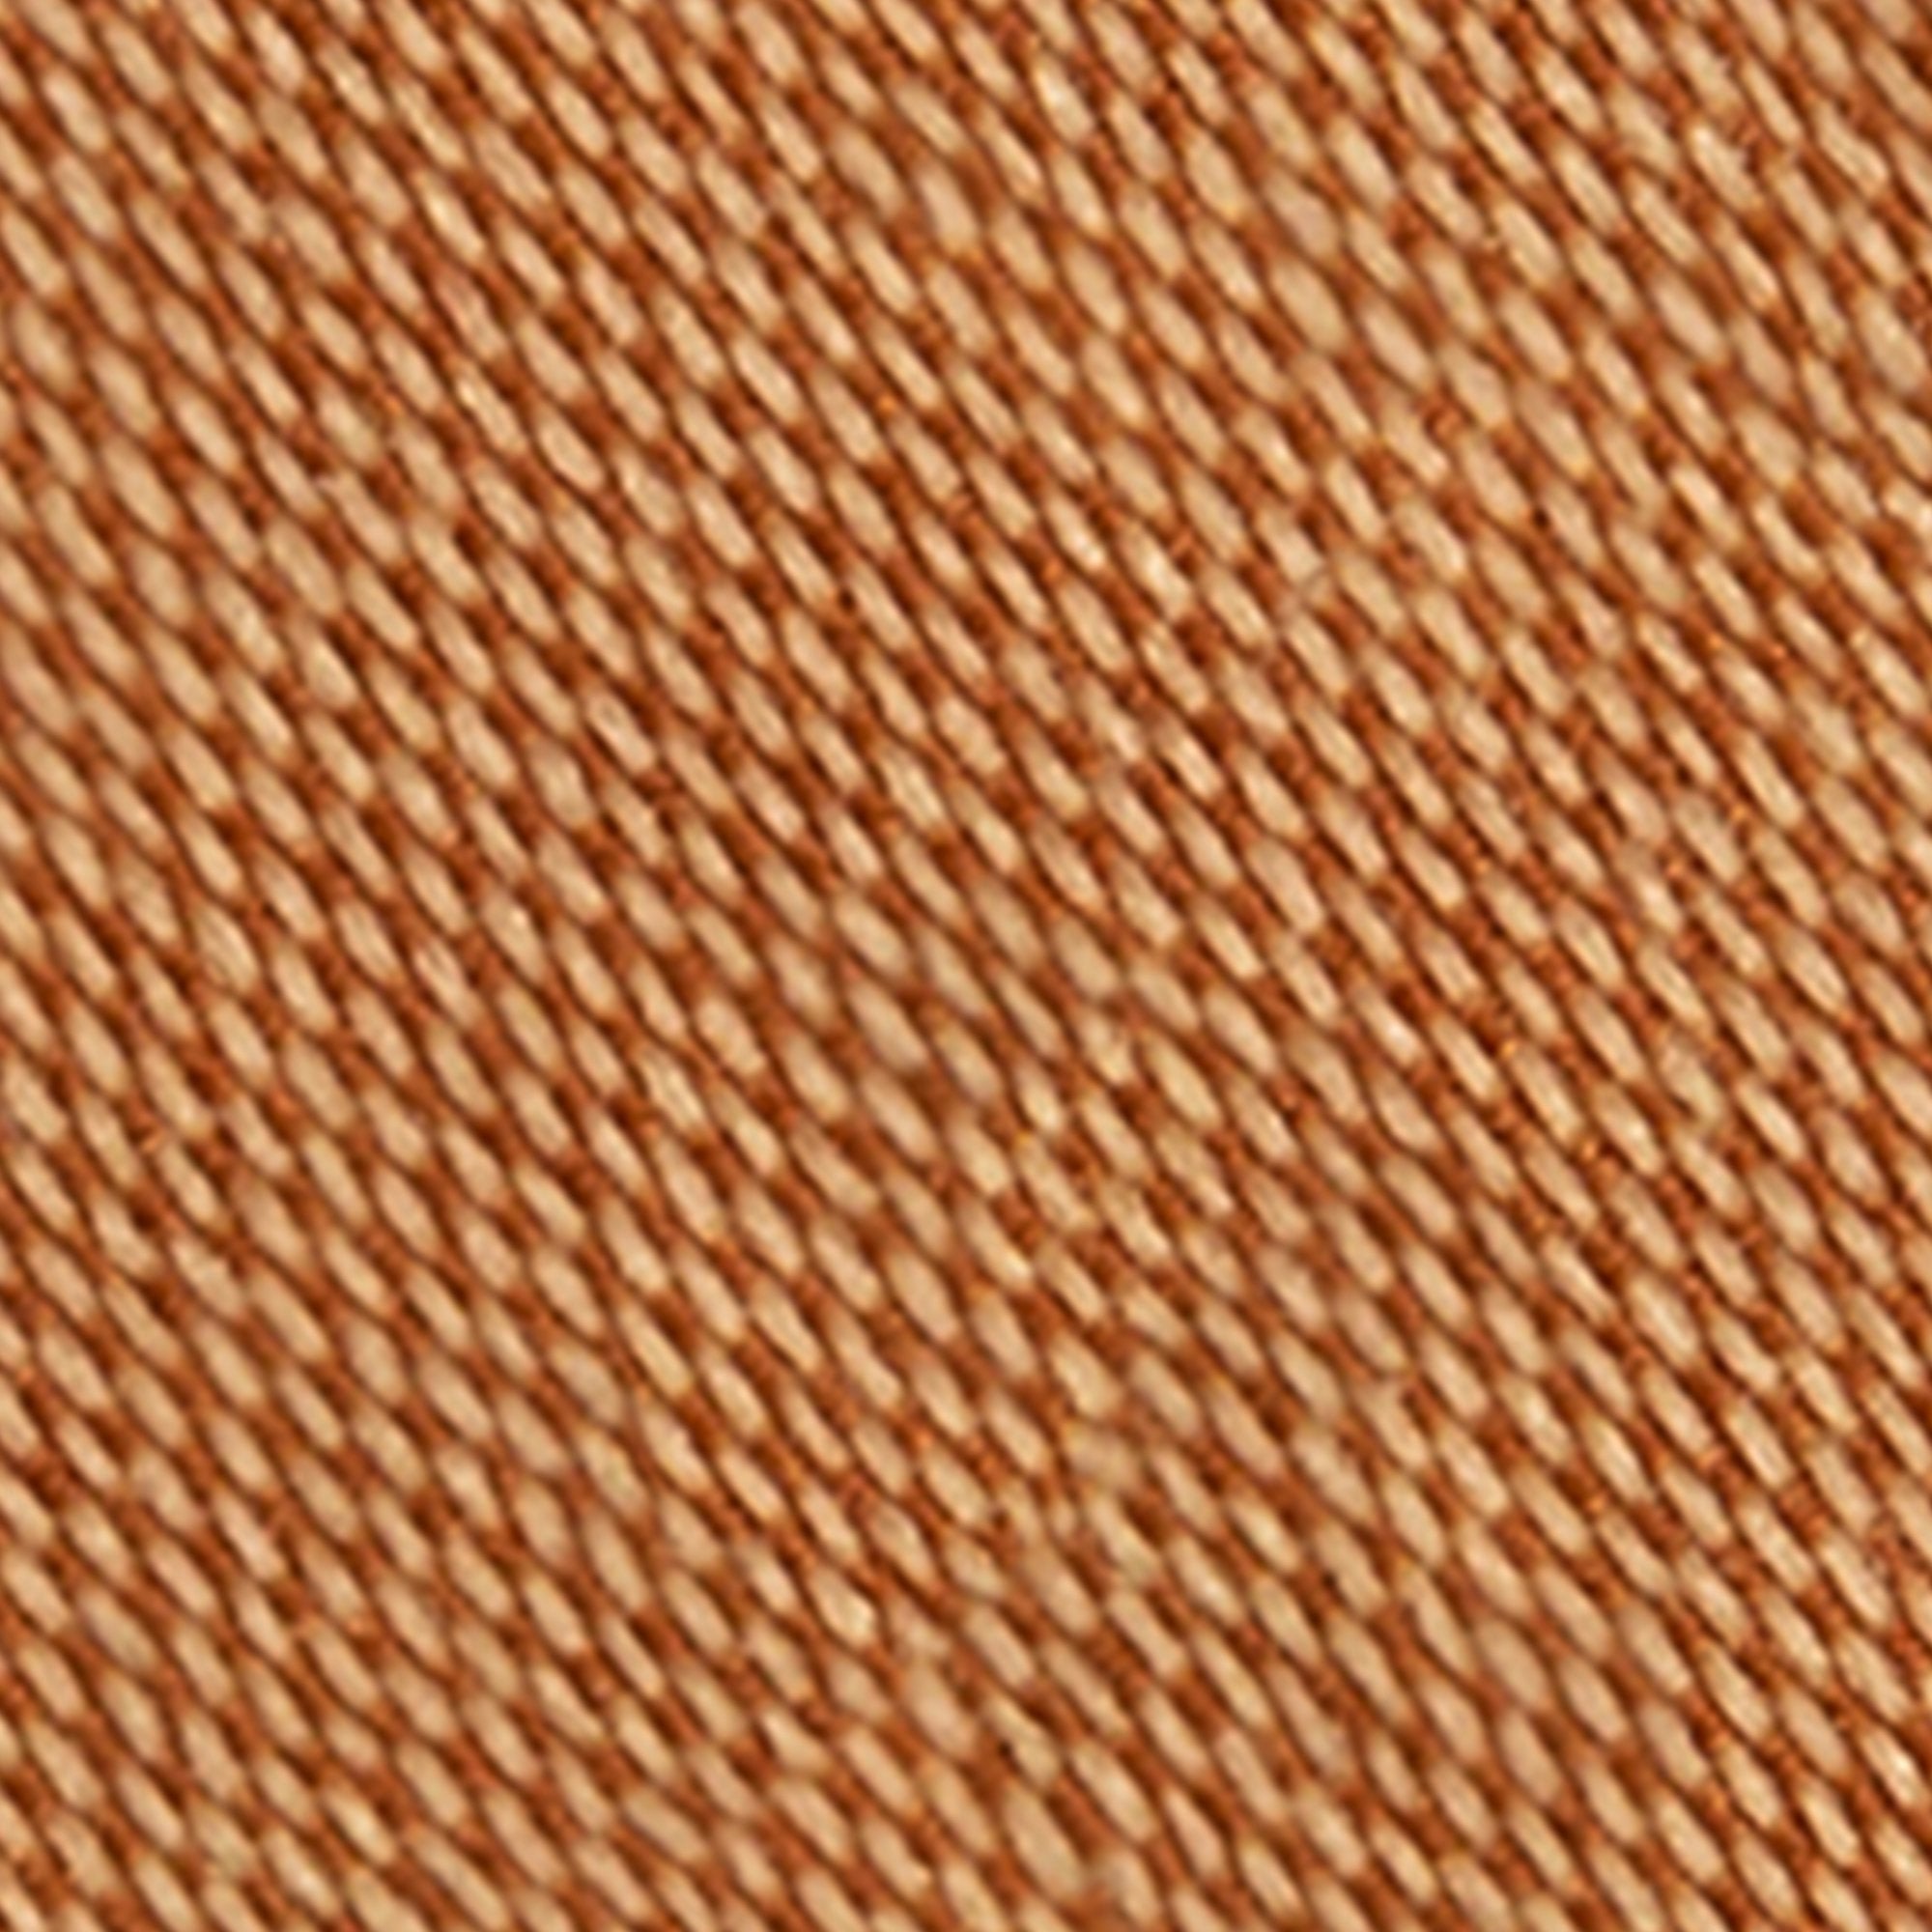 Adhesive Strip Tru-Colour® 1 X 3 Inch Fabric Rectangle Sterile